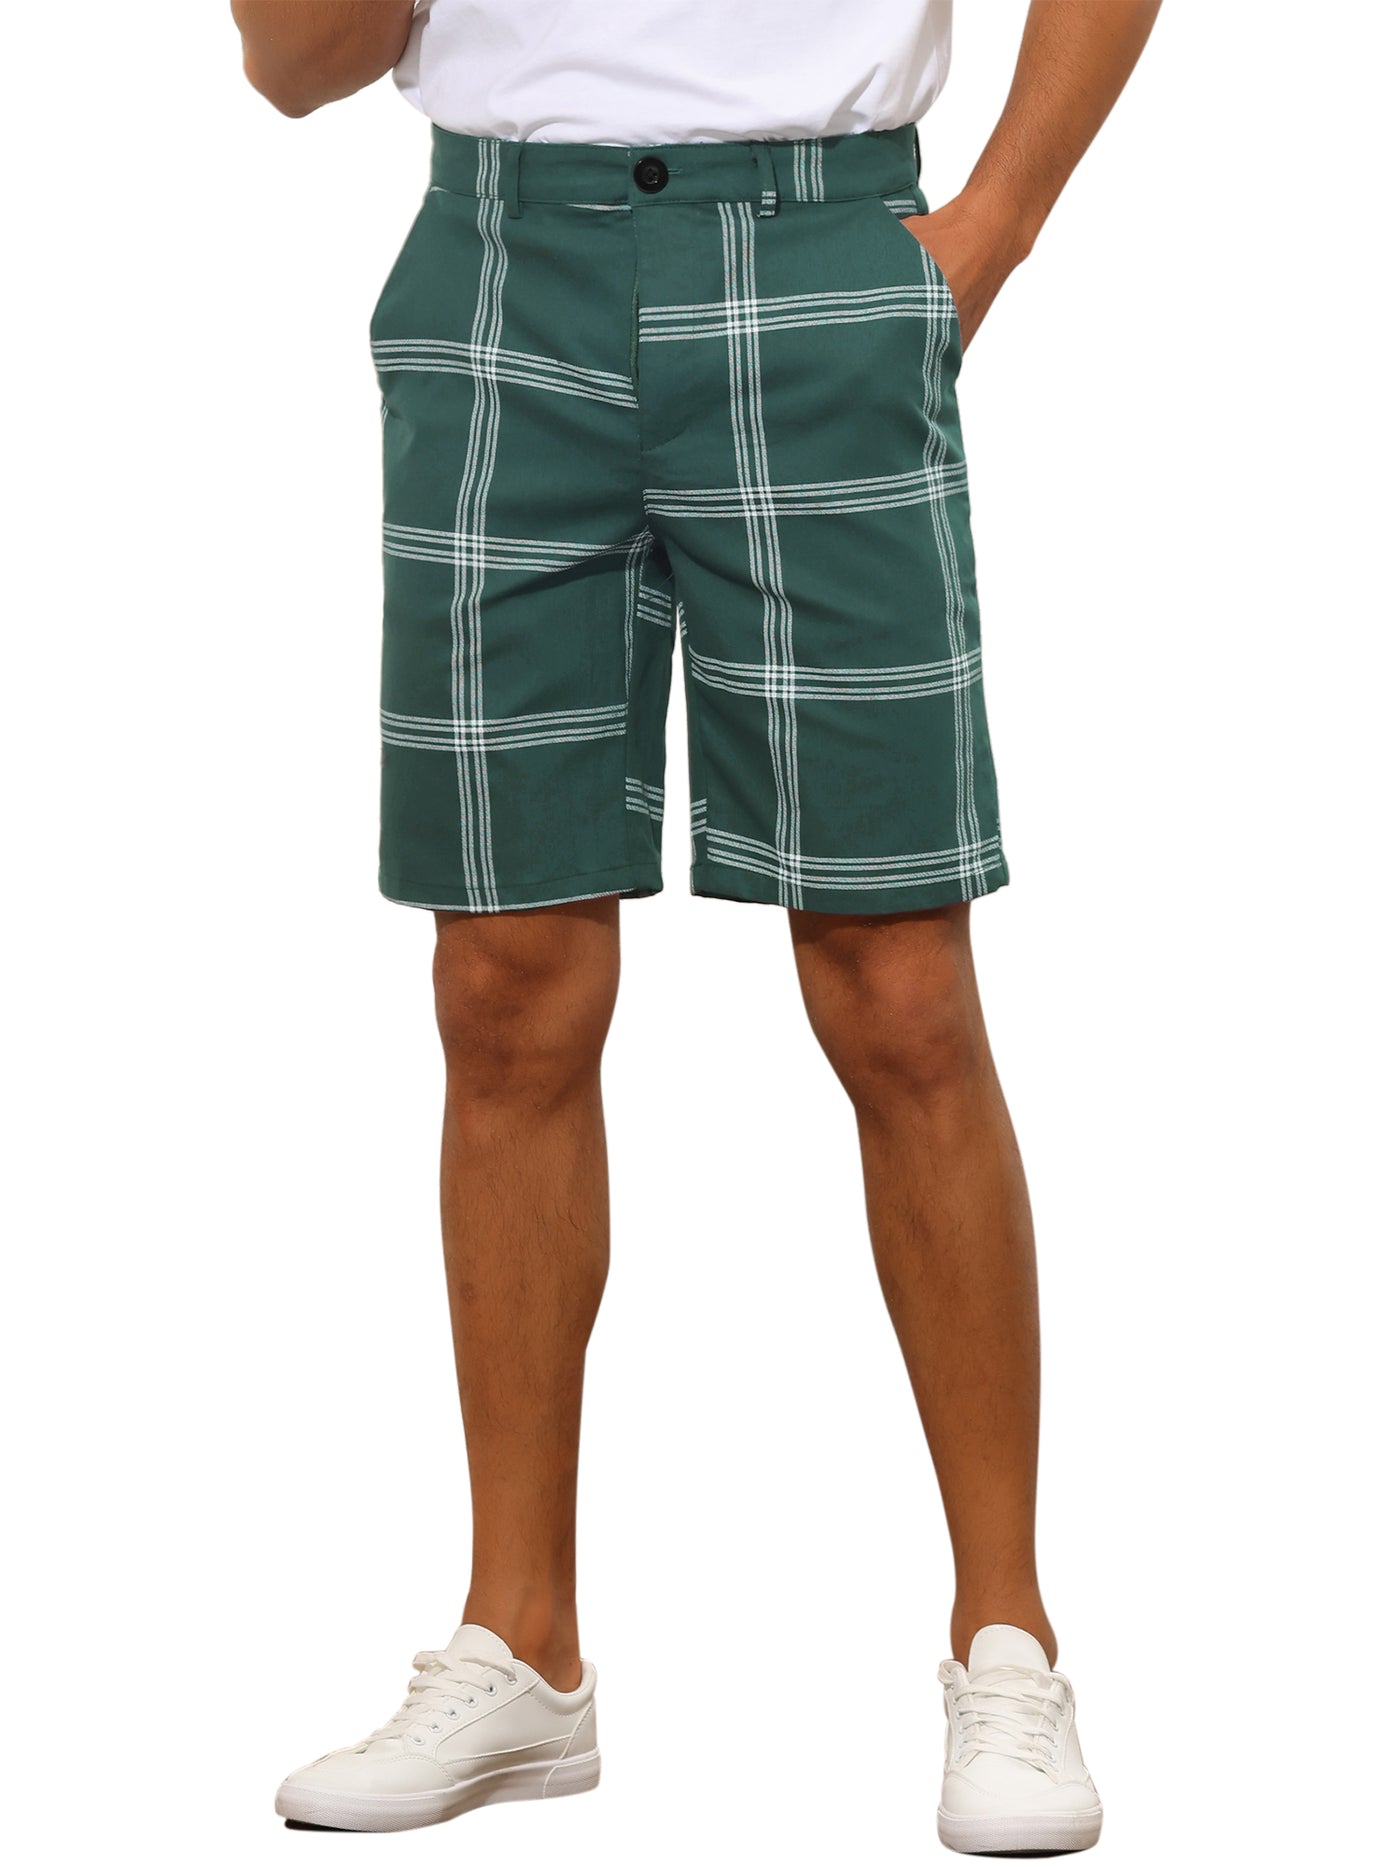 Bublédon Plaid Short Pants for Men's Regular Fit Flat Front Formal Summer Chino Golf Shorts